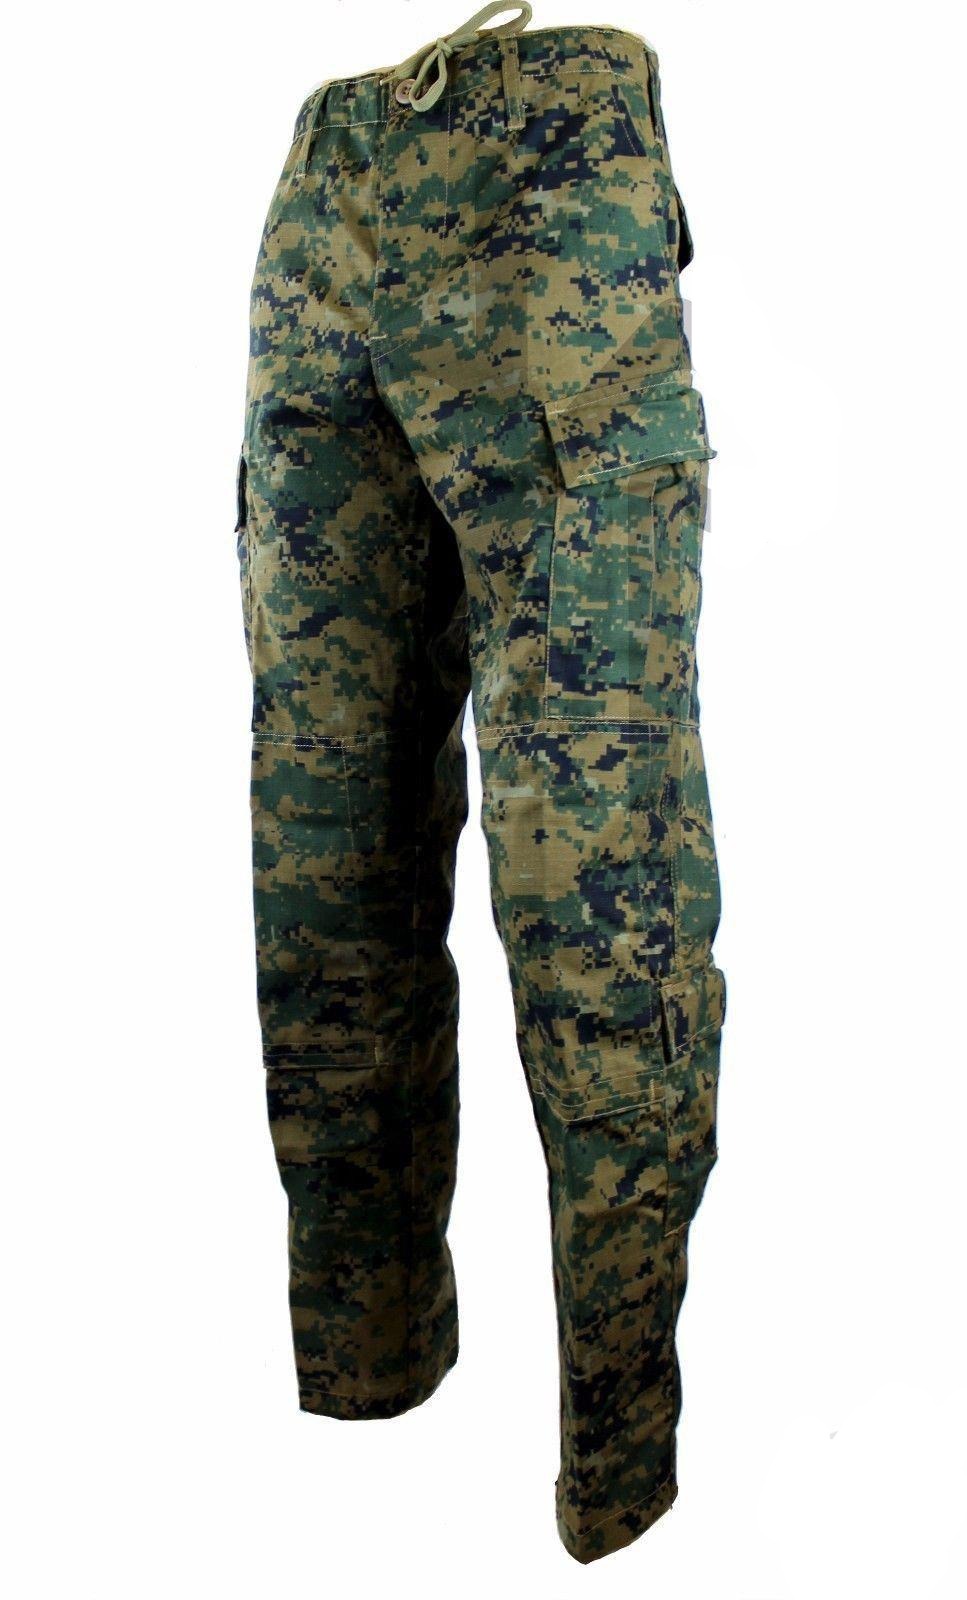 Digital Camo BDU Pants (MARPAT) Small